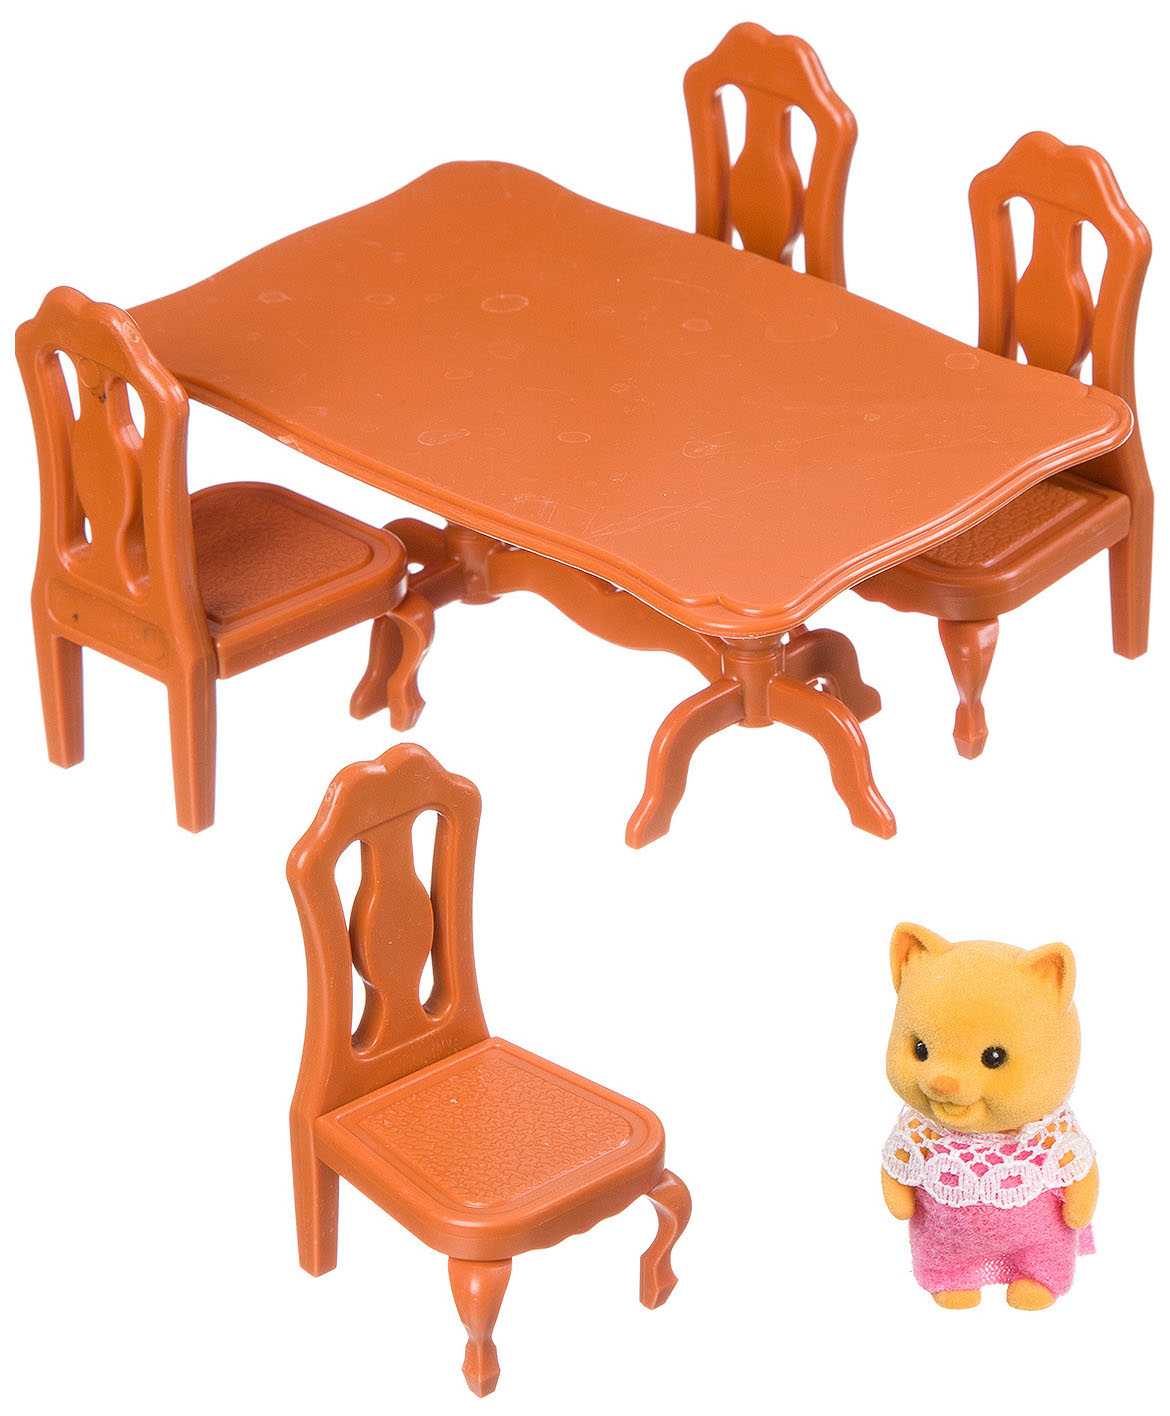 Игровой набор Happy Family с фигуркой зверюшки, кухня, 7,5х12,5х6,52 см, BOX, арт.012-01B. набор na na na surprise family lavender kitty 575962